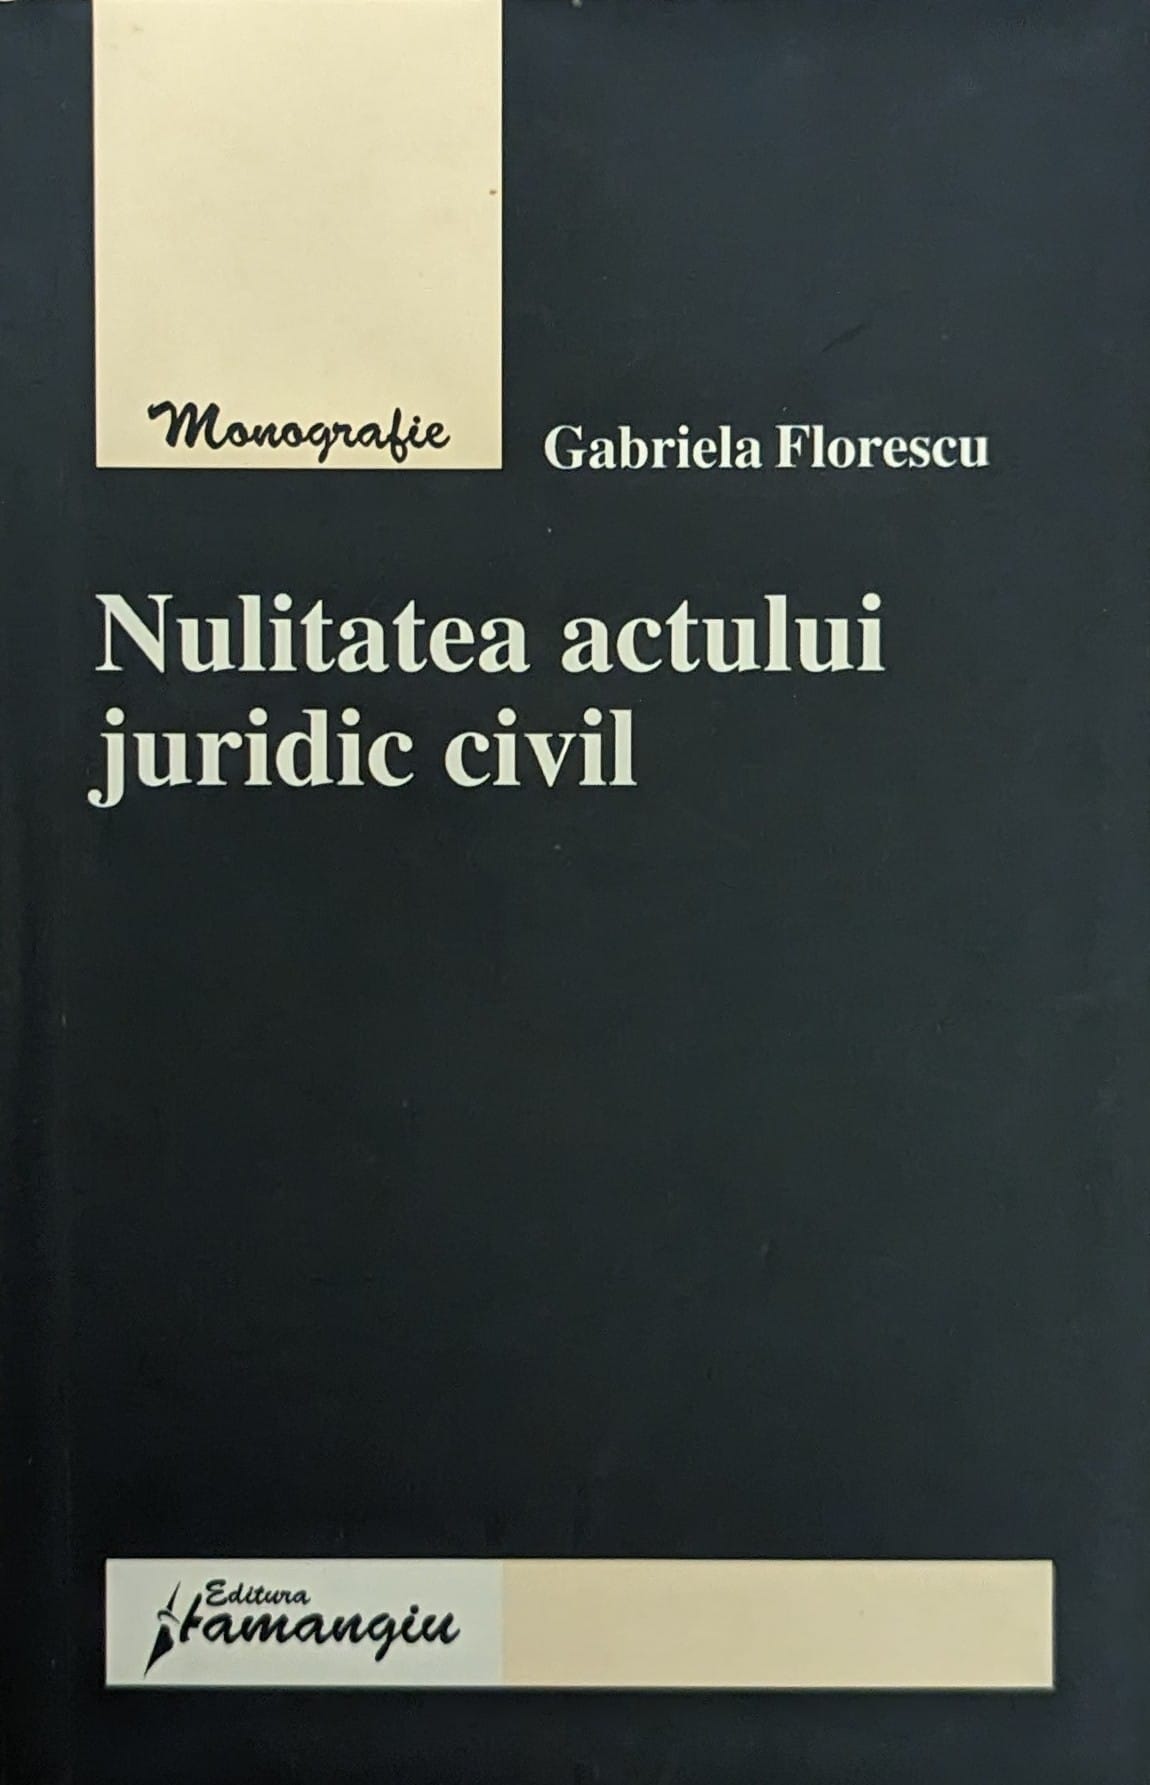 nulitatea actului juridic civil                                                                      gabriela florescu                                                                                   